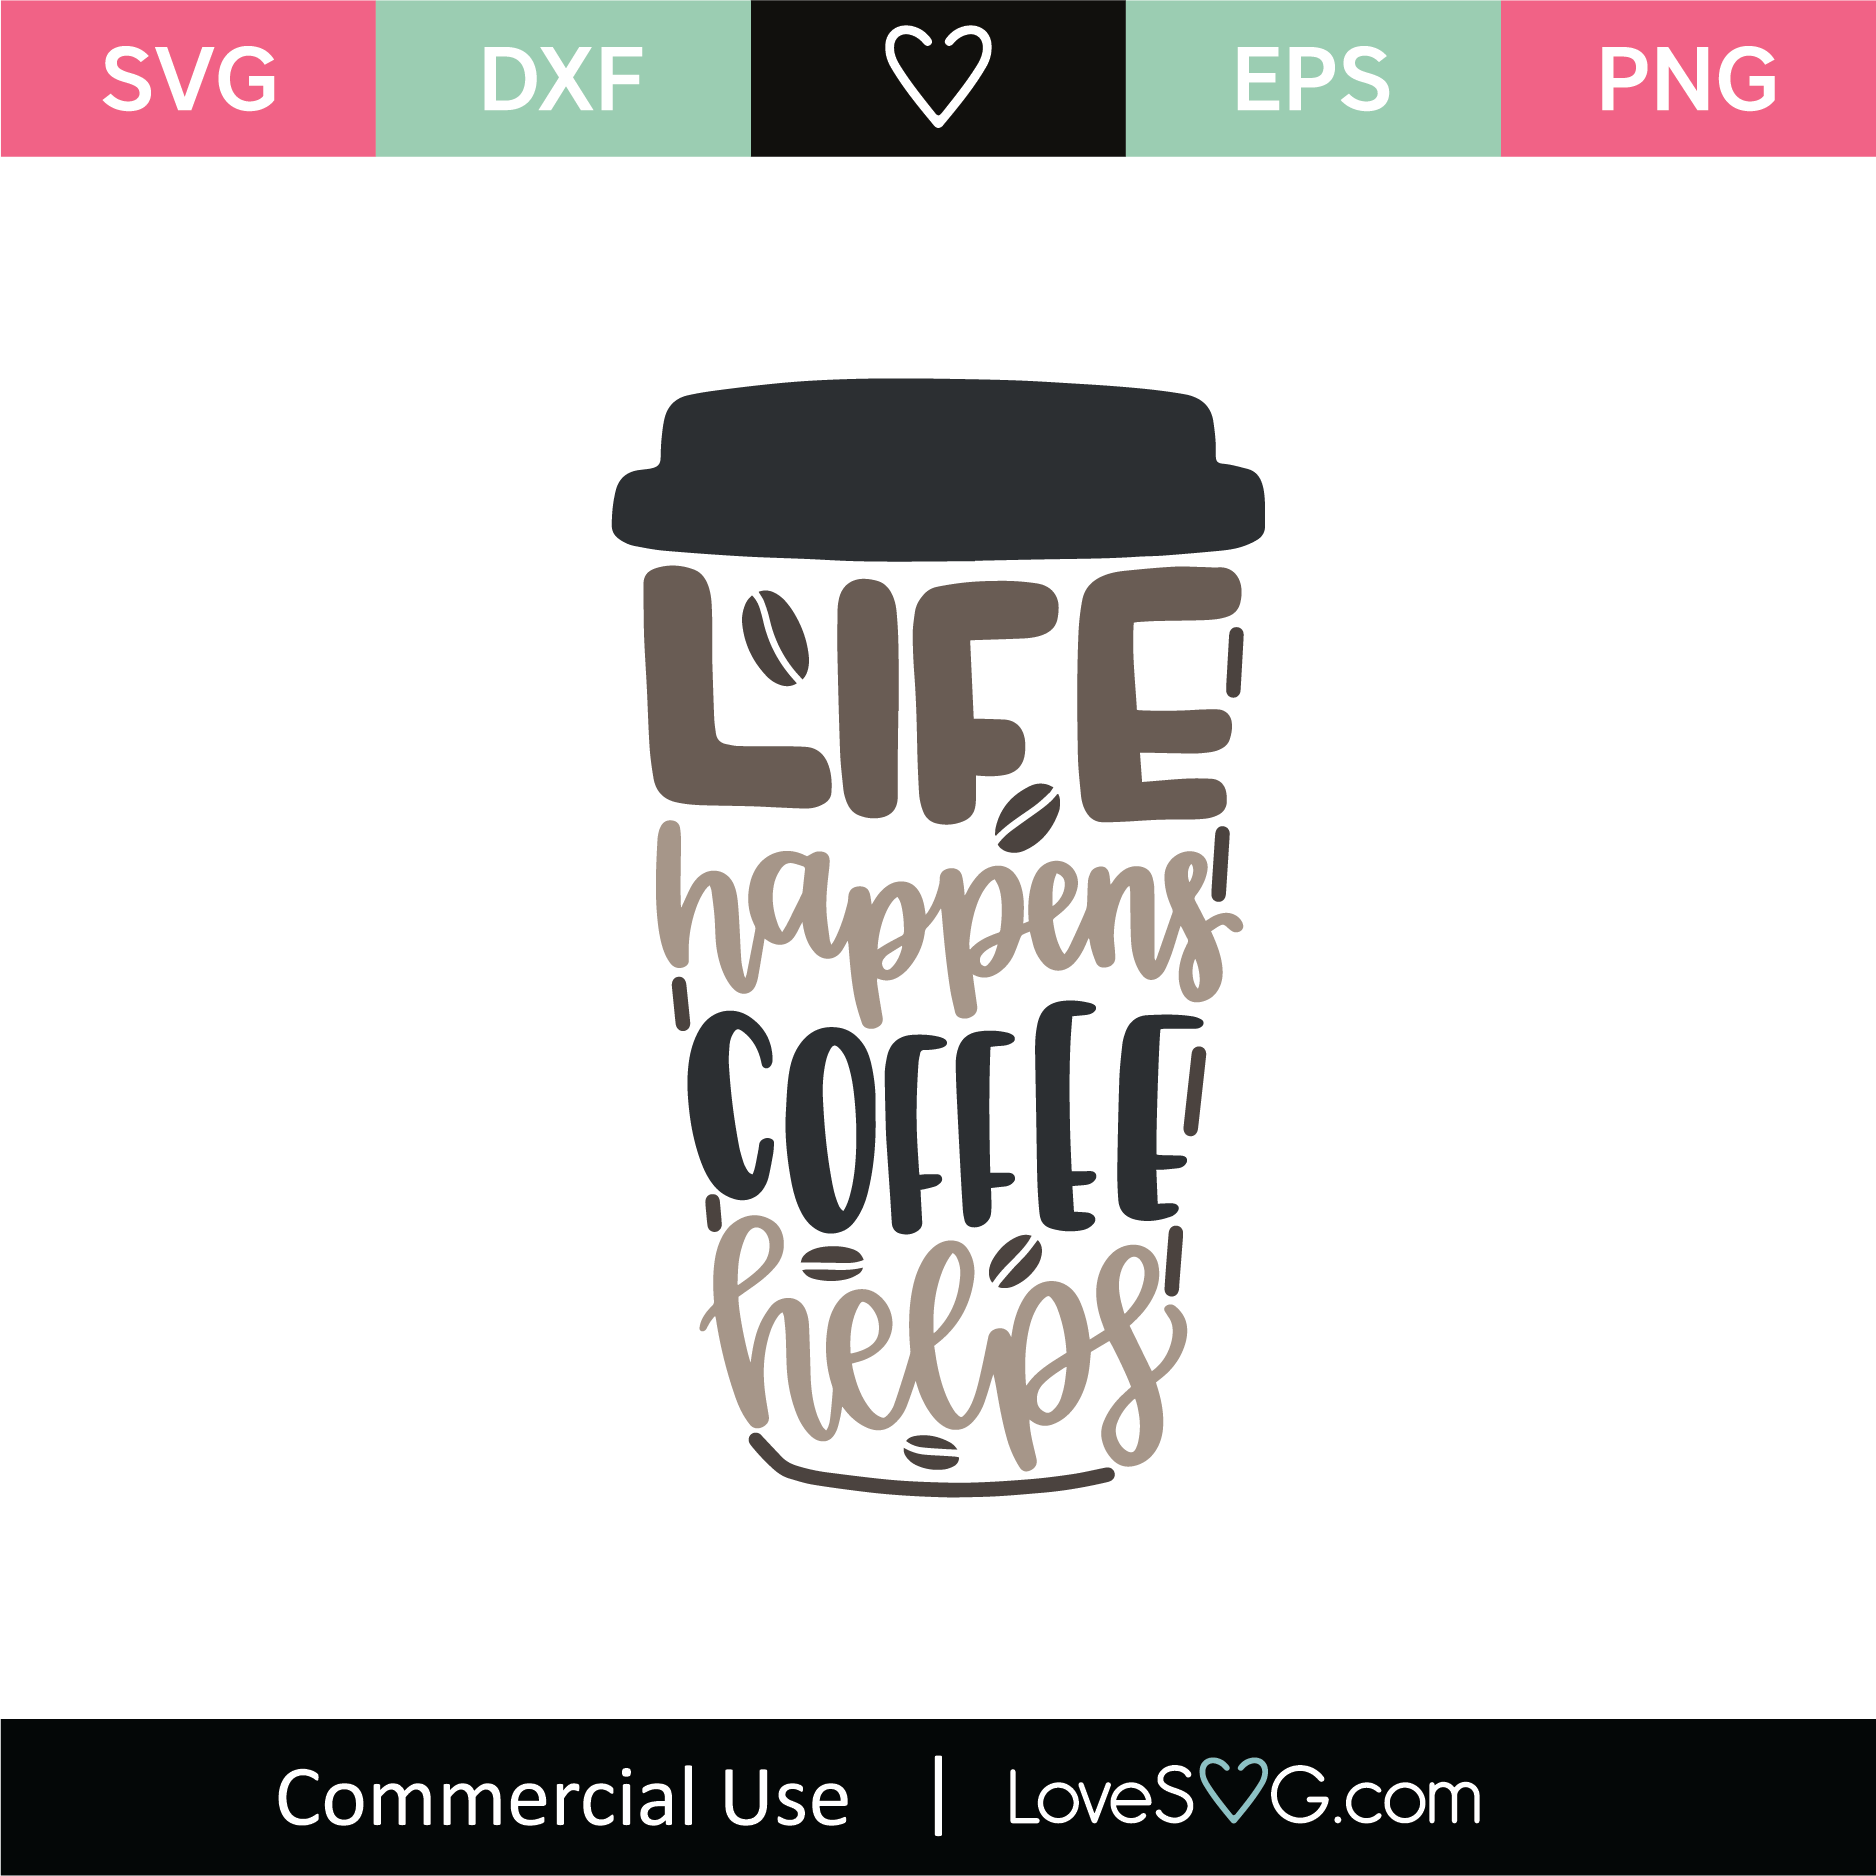 Coffee Lover SVG Bundle Coffee SVG Design File How Do I Take My Coffee Seriously Very Seriously SVG coffee design funny coffee svg file